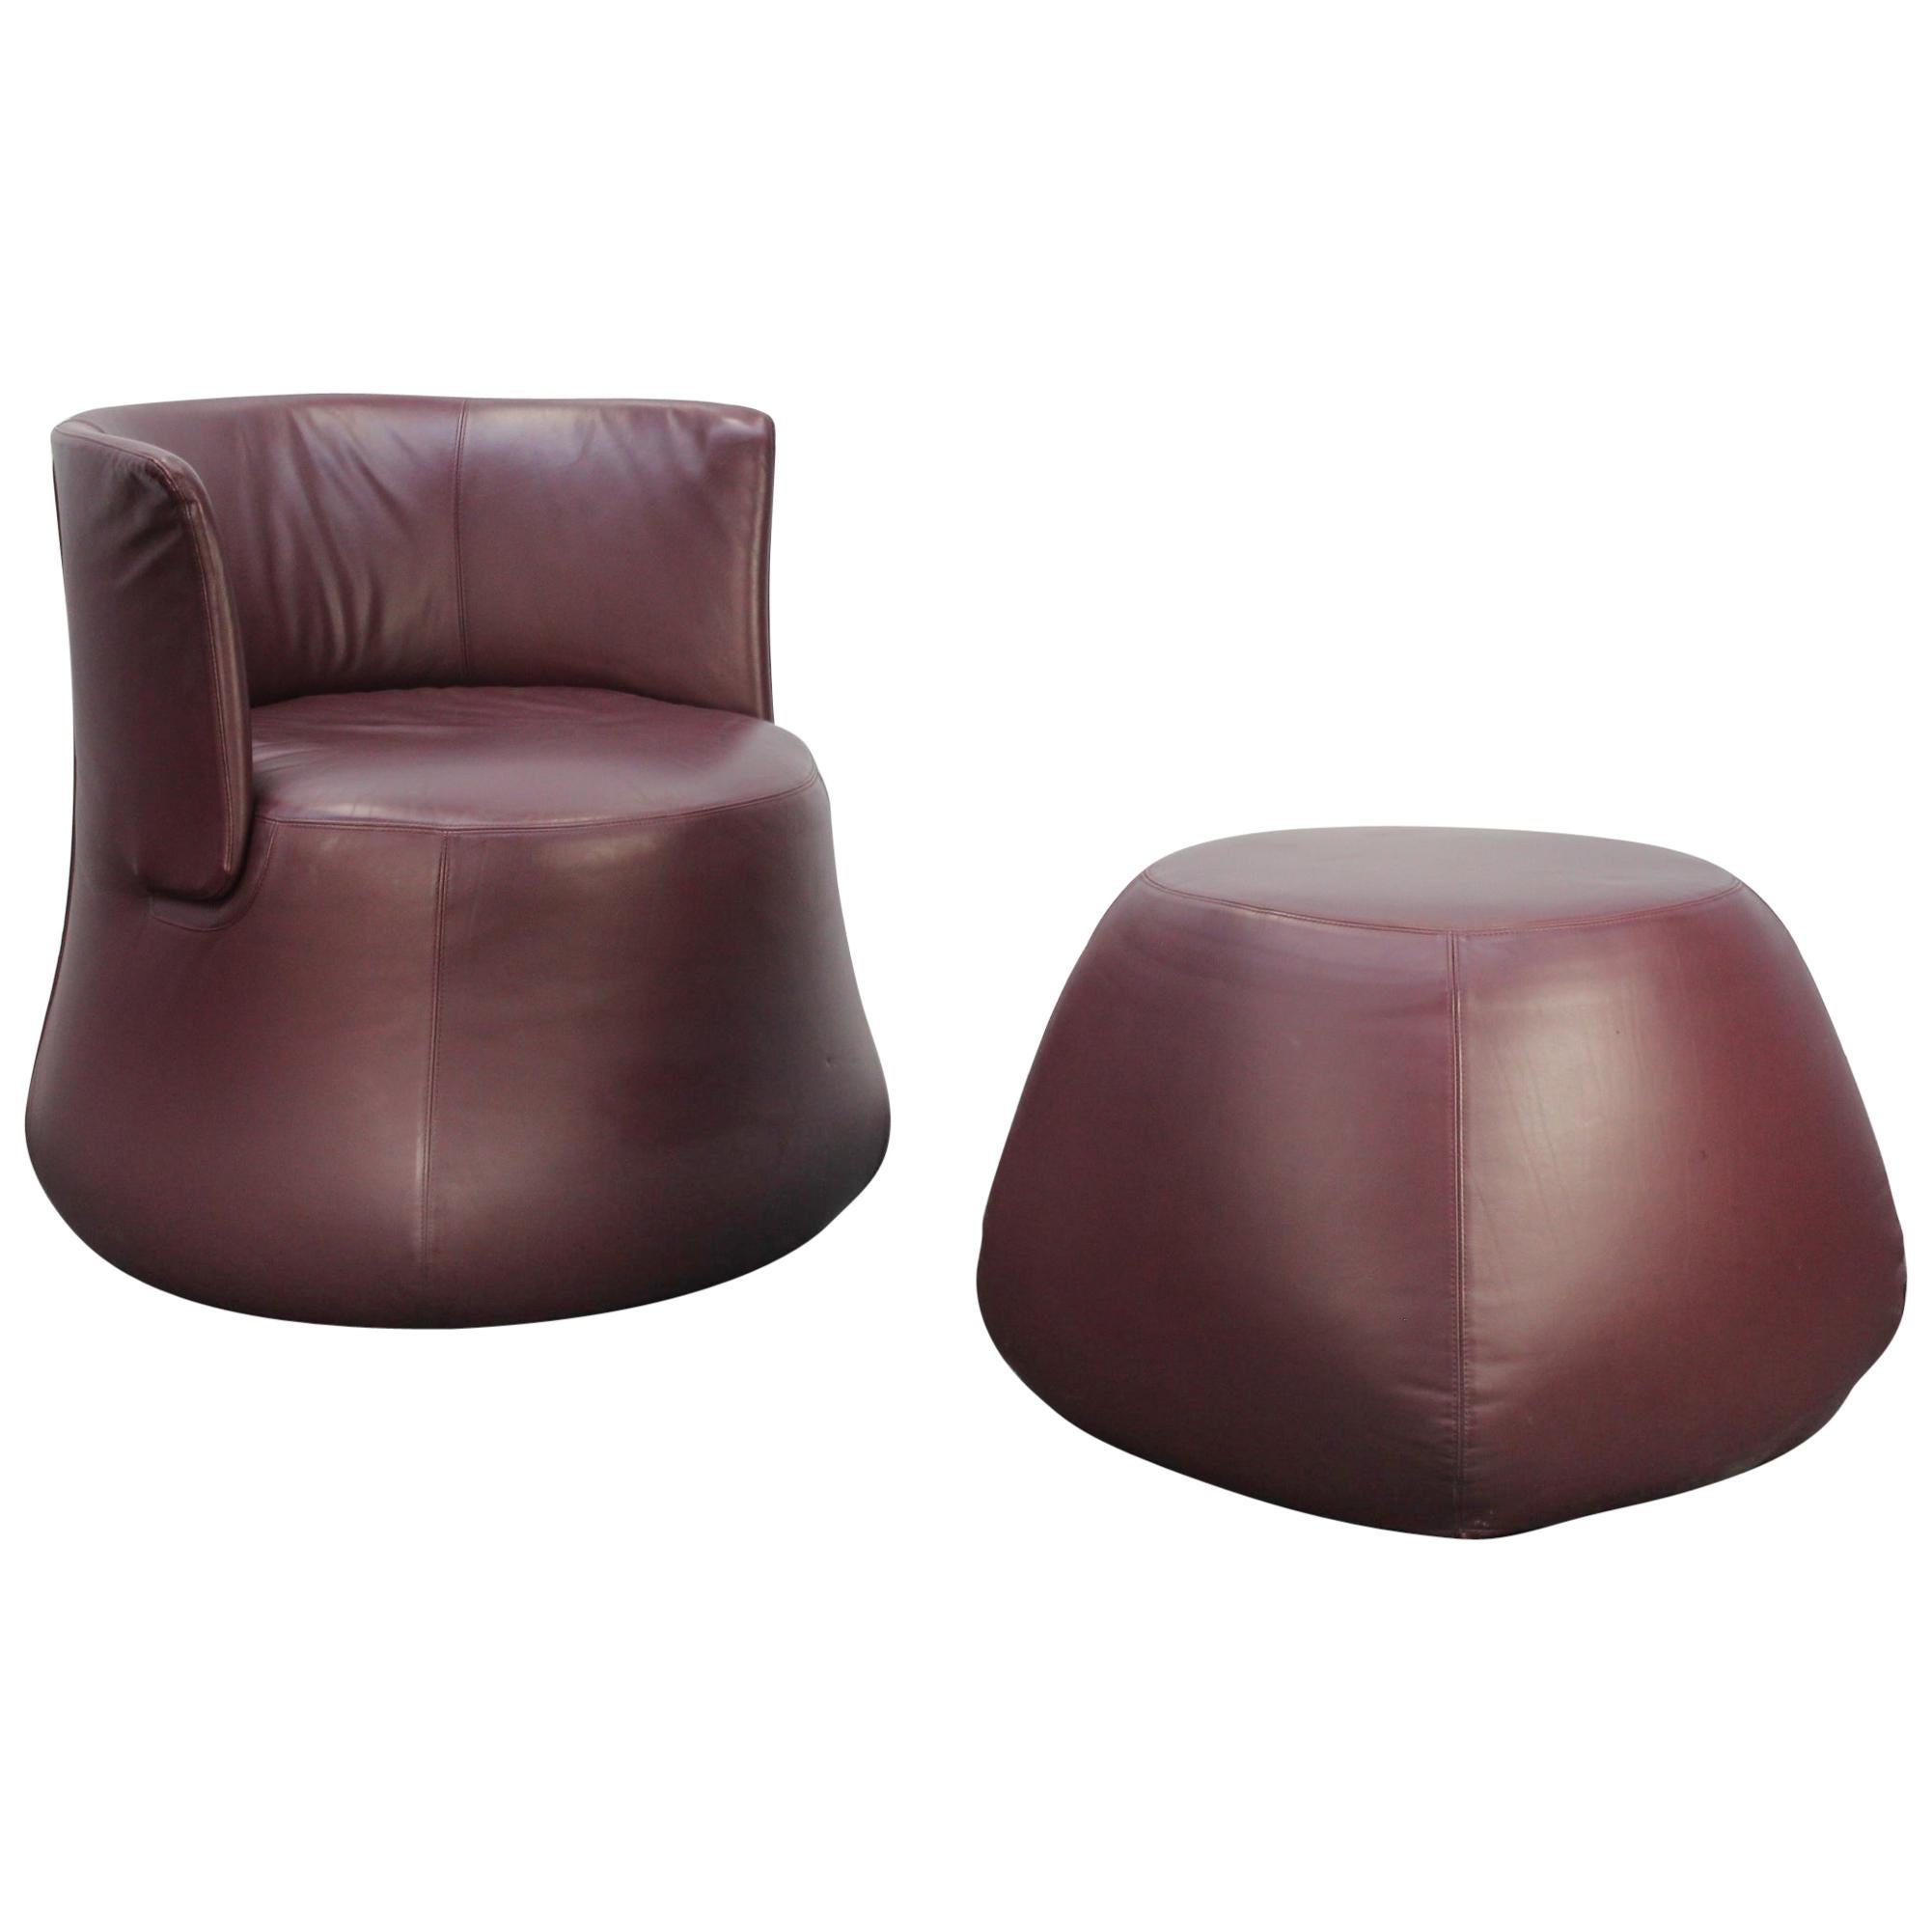 B&B Italia “Fat Sofa” Armchair and Pouf in Aubergine Purple “Gamma” Leather